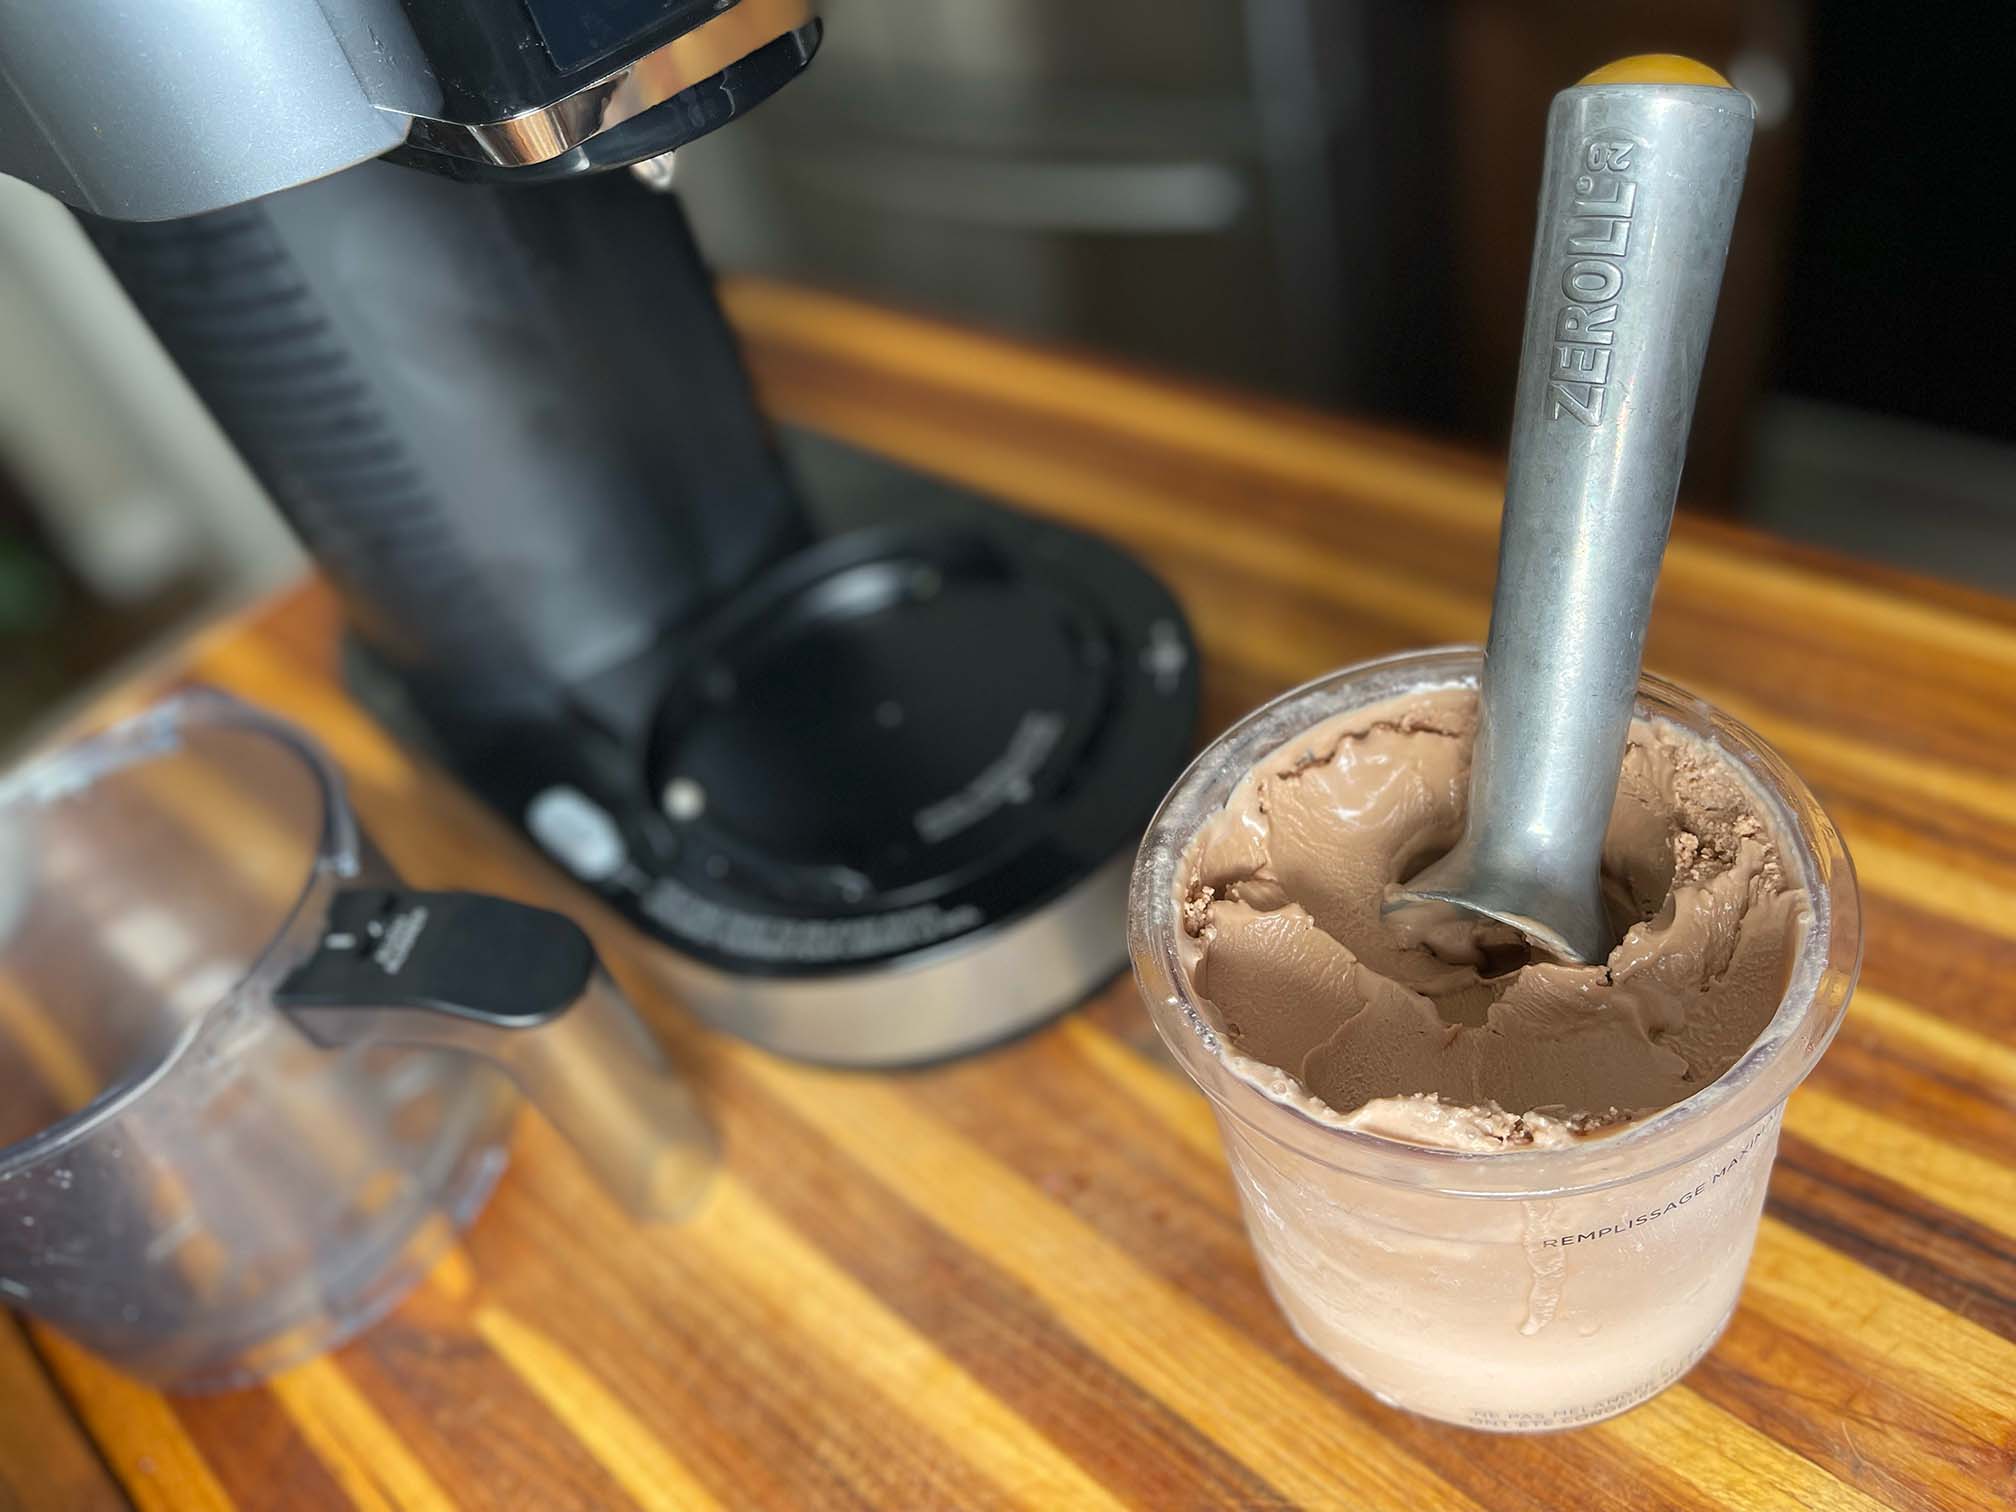 Ninja Creami Ice Cream Maker I Editor Review With Photos